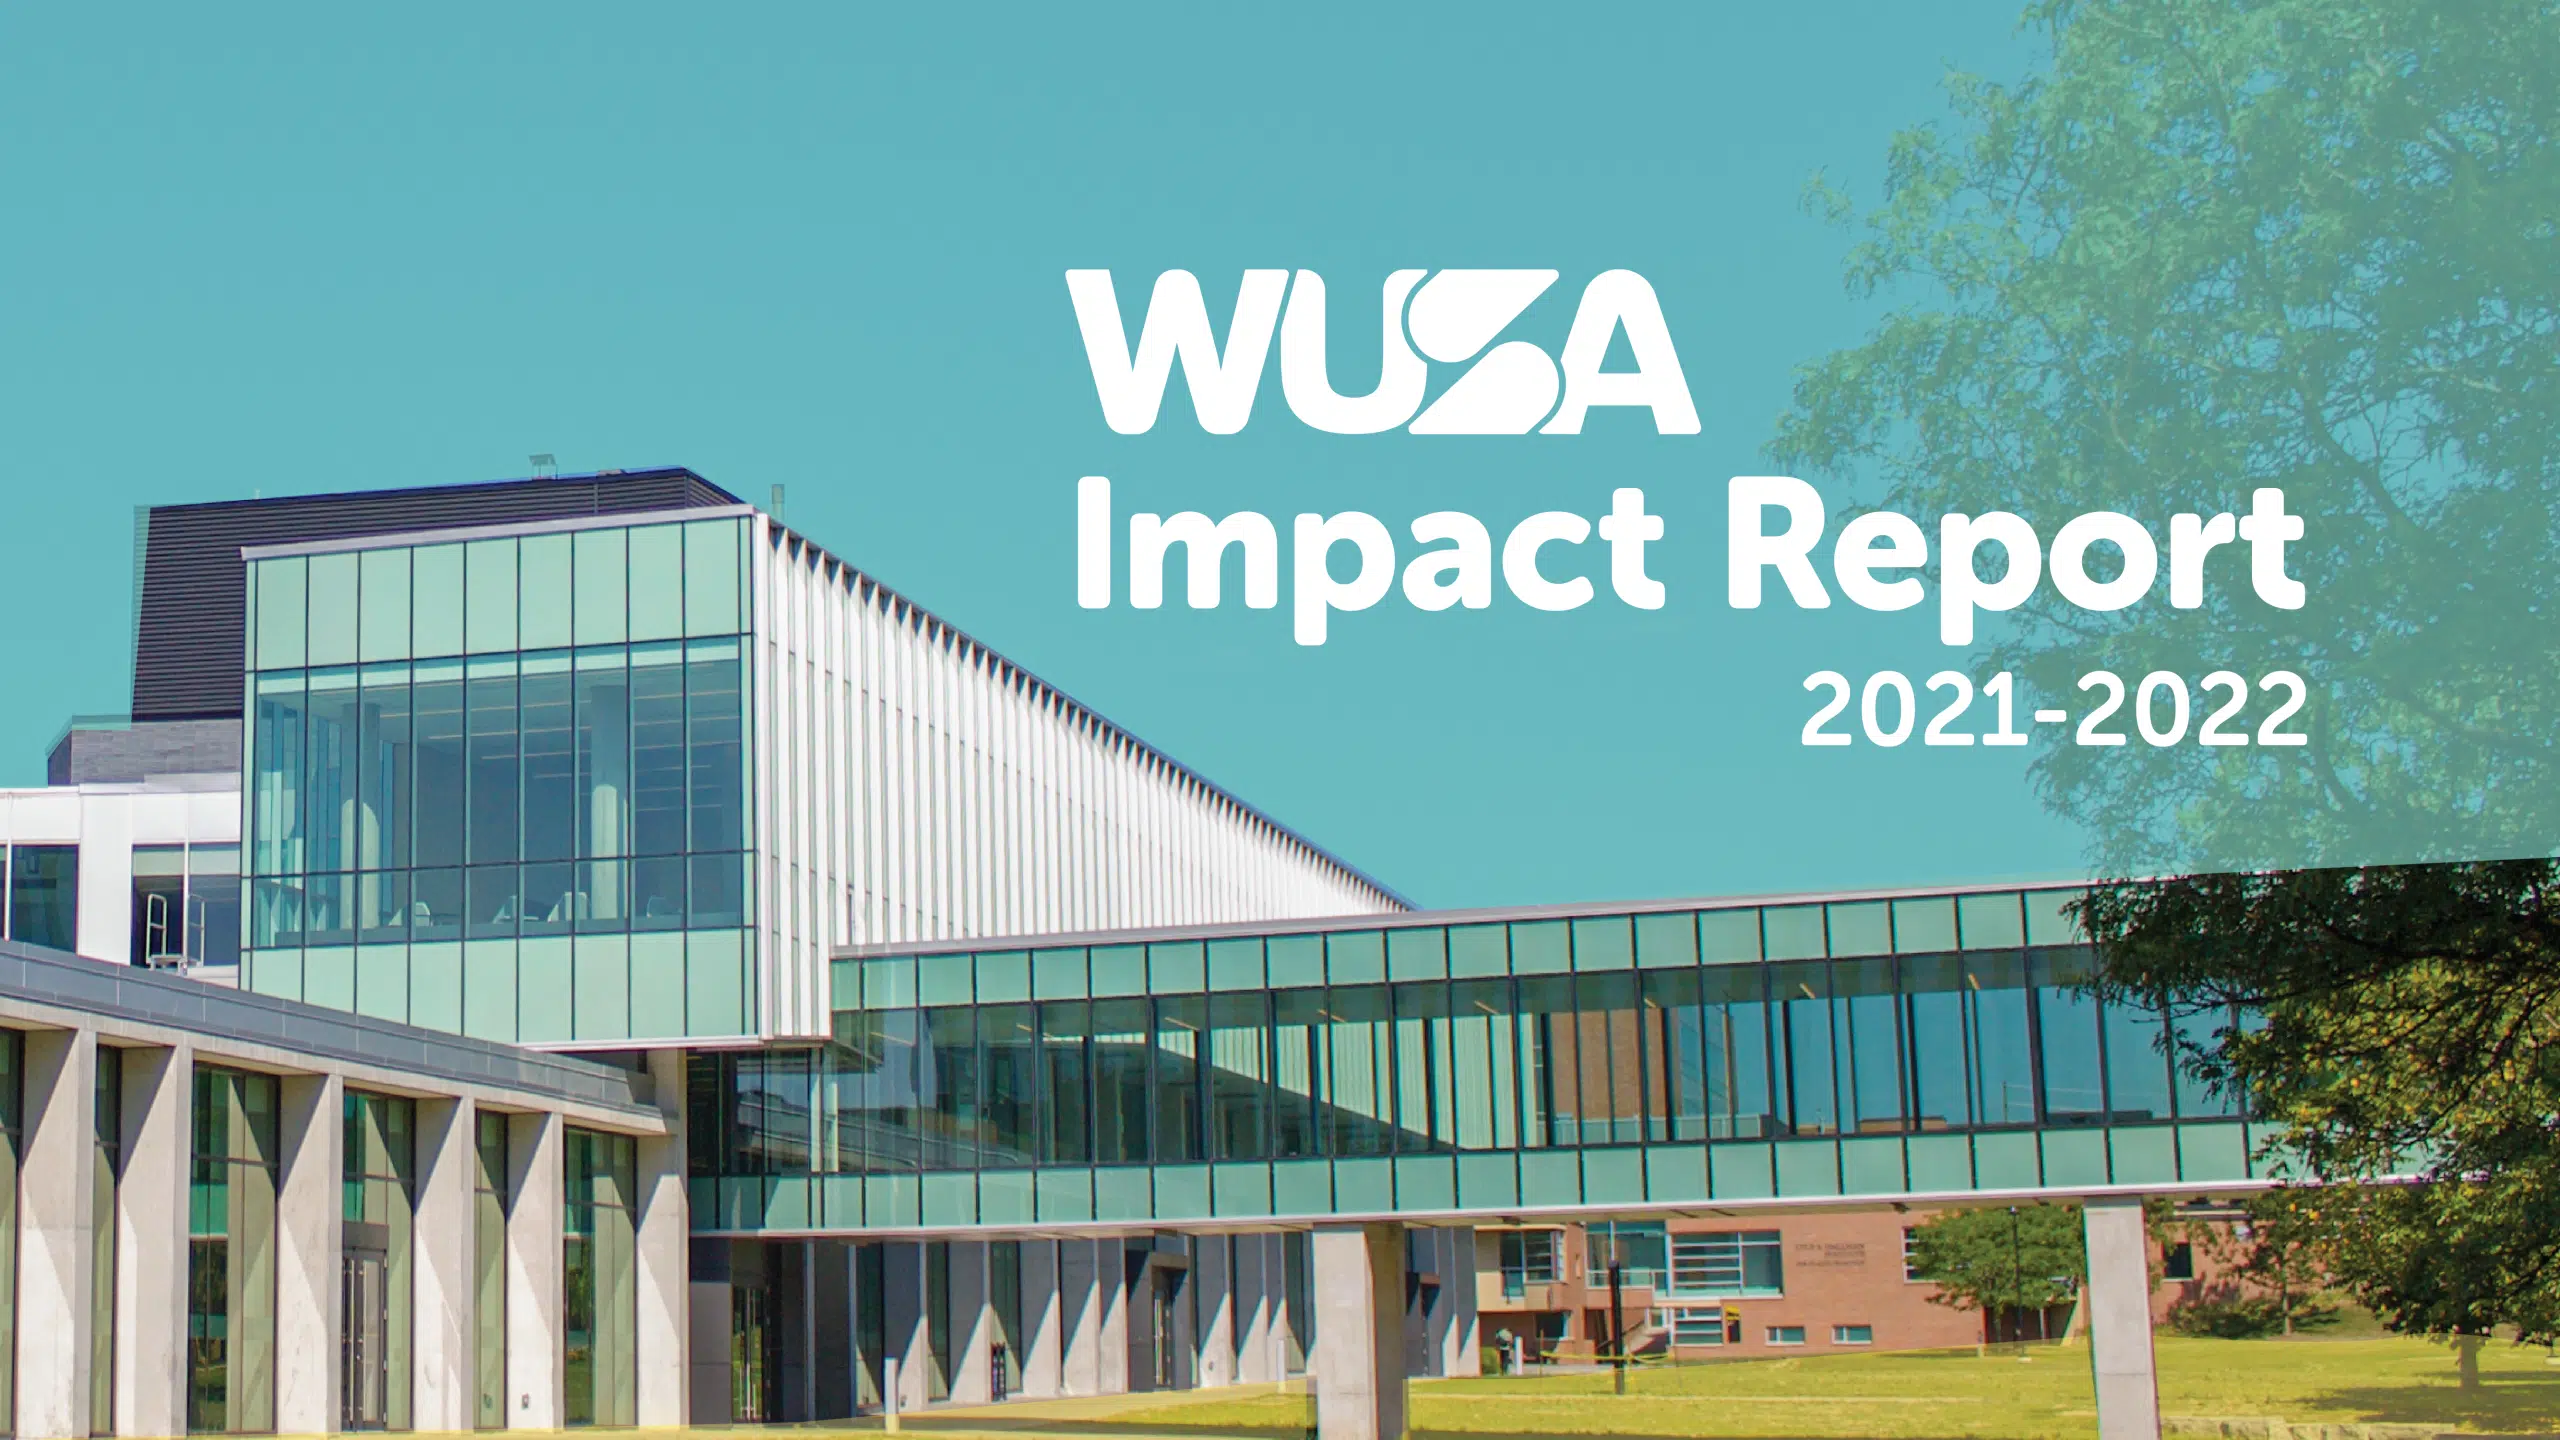 WUSA Impact Report 2021-2022